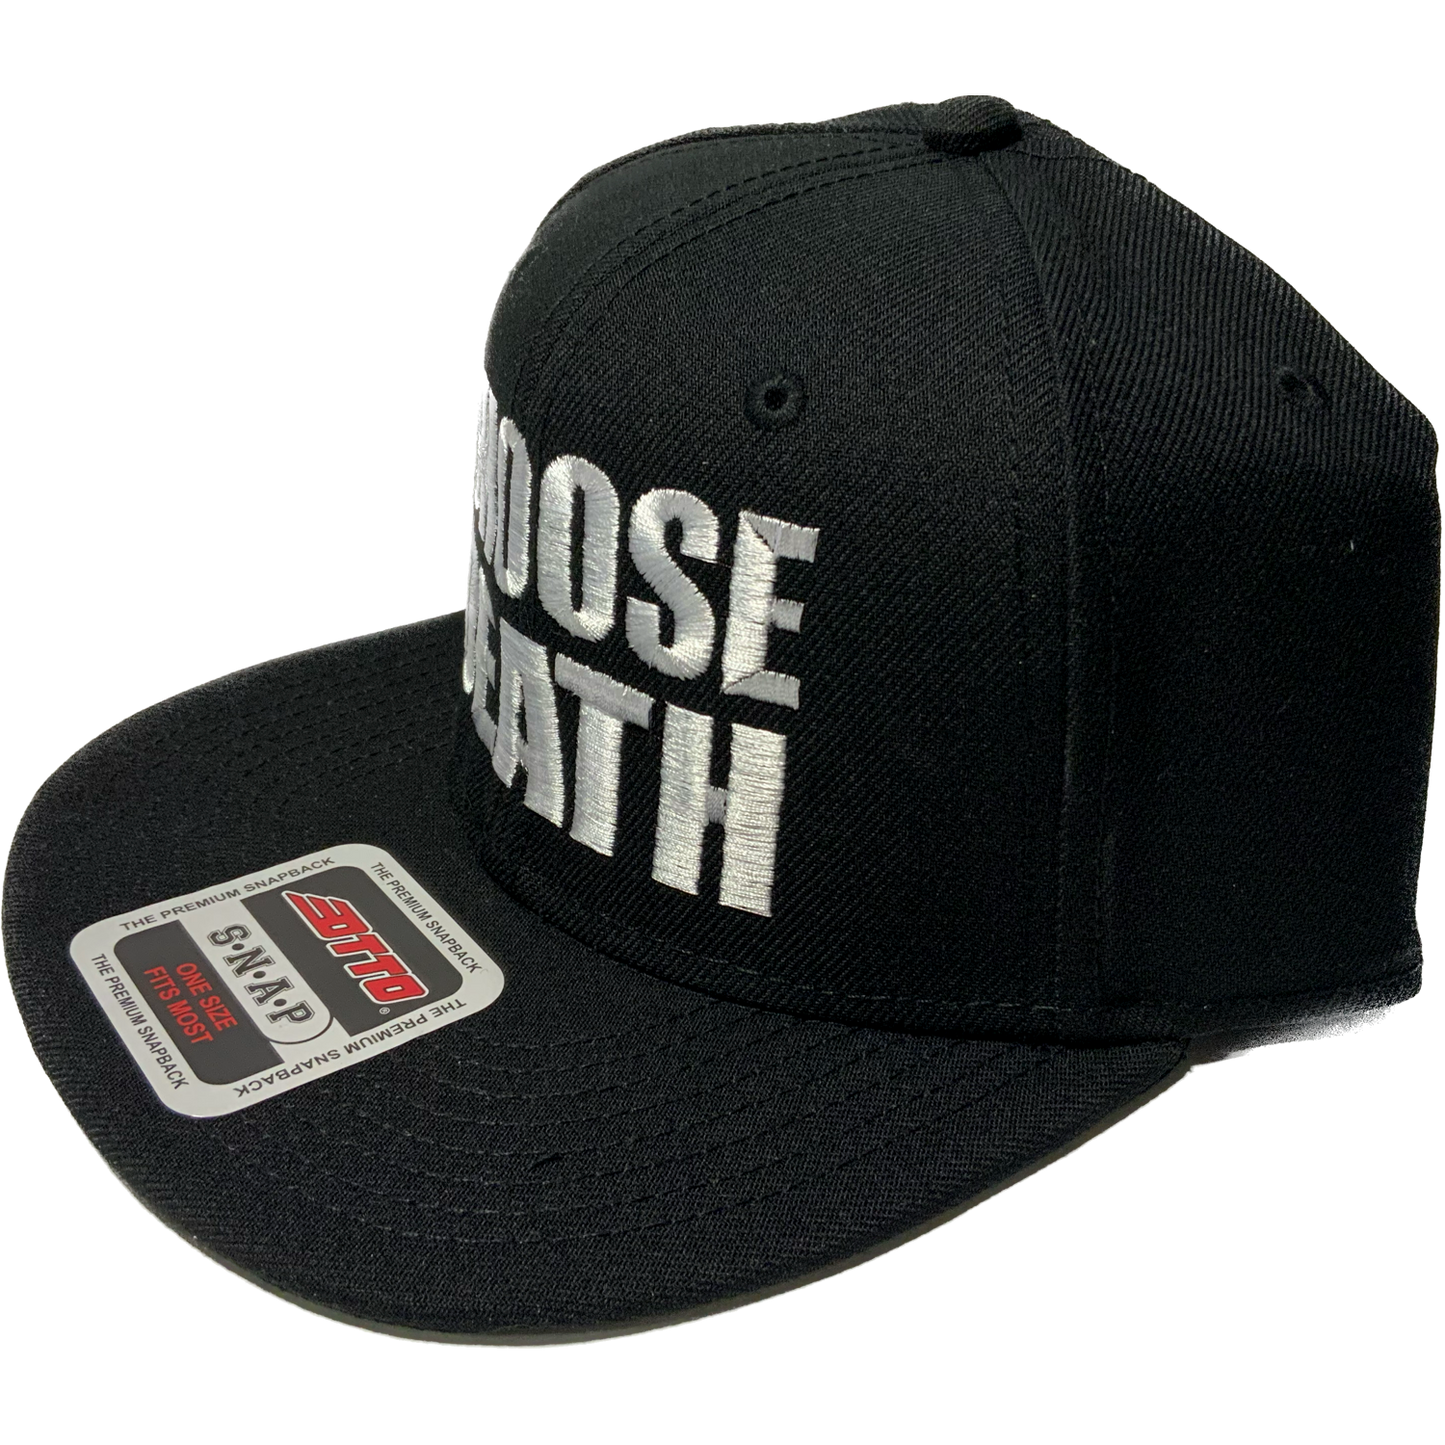 Choose Death (Snapback Hat)